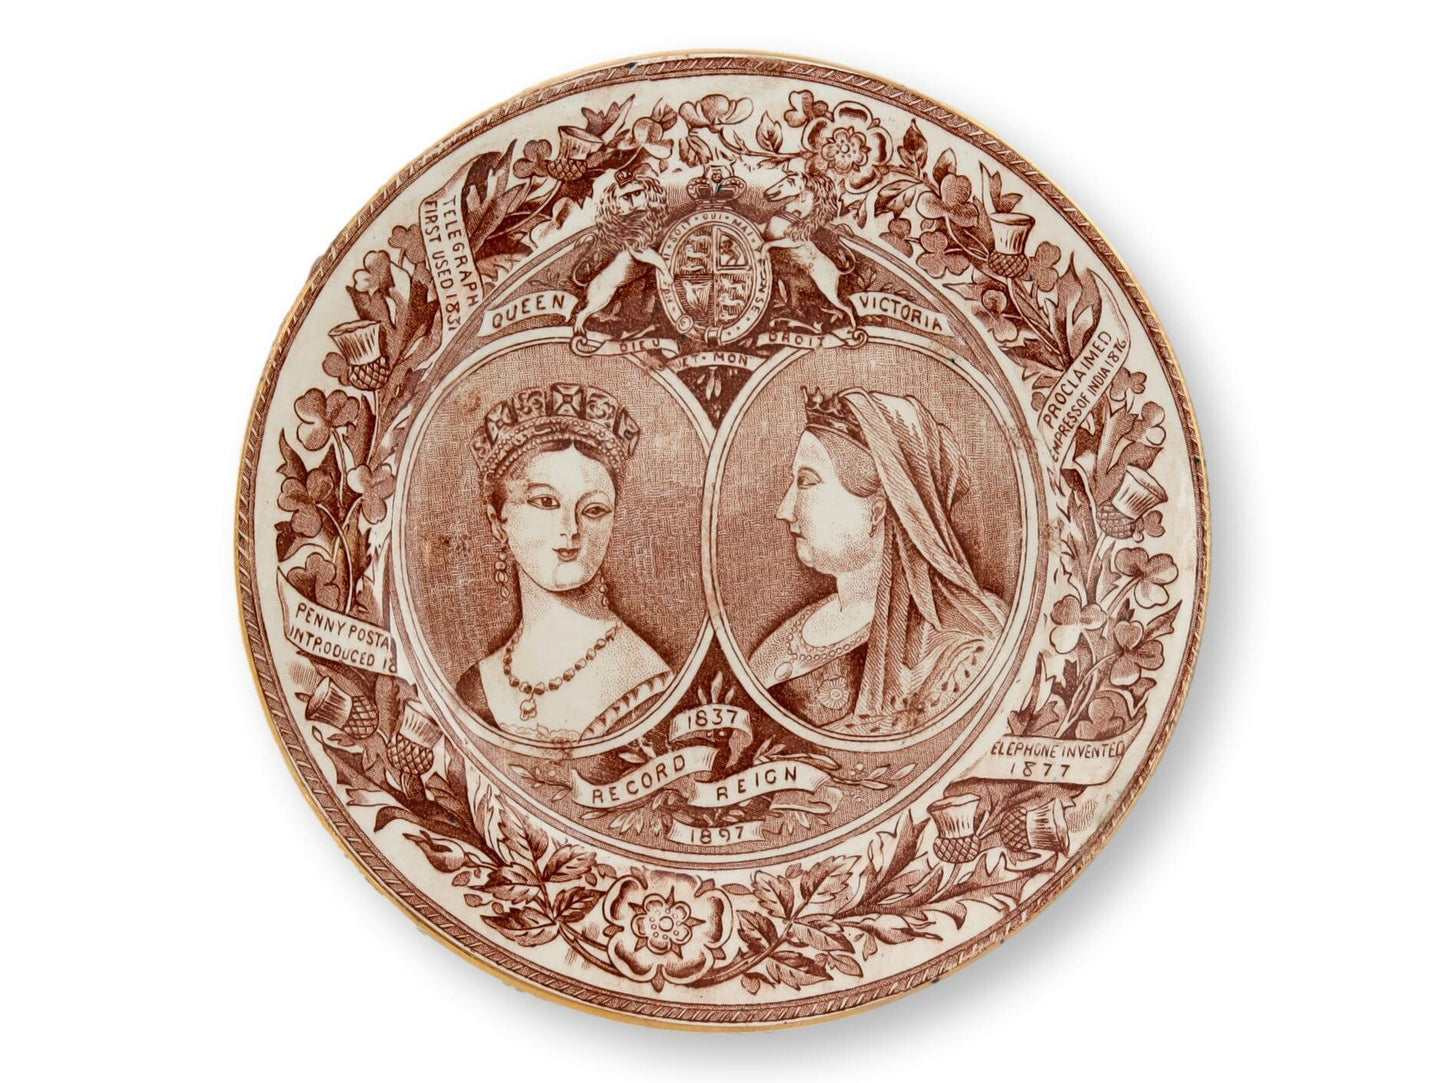 1897 Queen Victoria Diamond Jubilee Plate